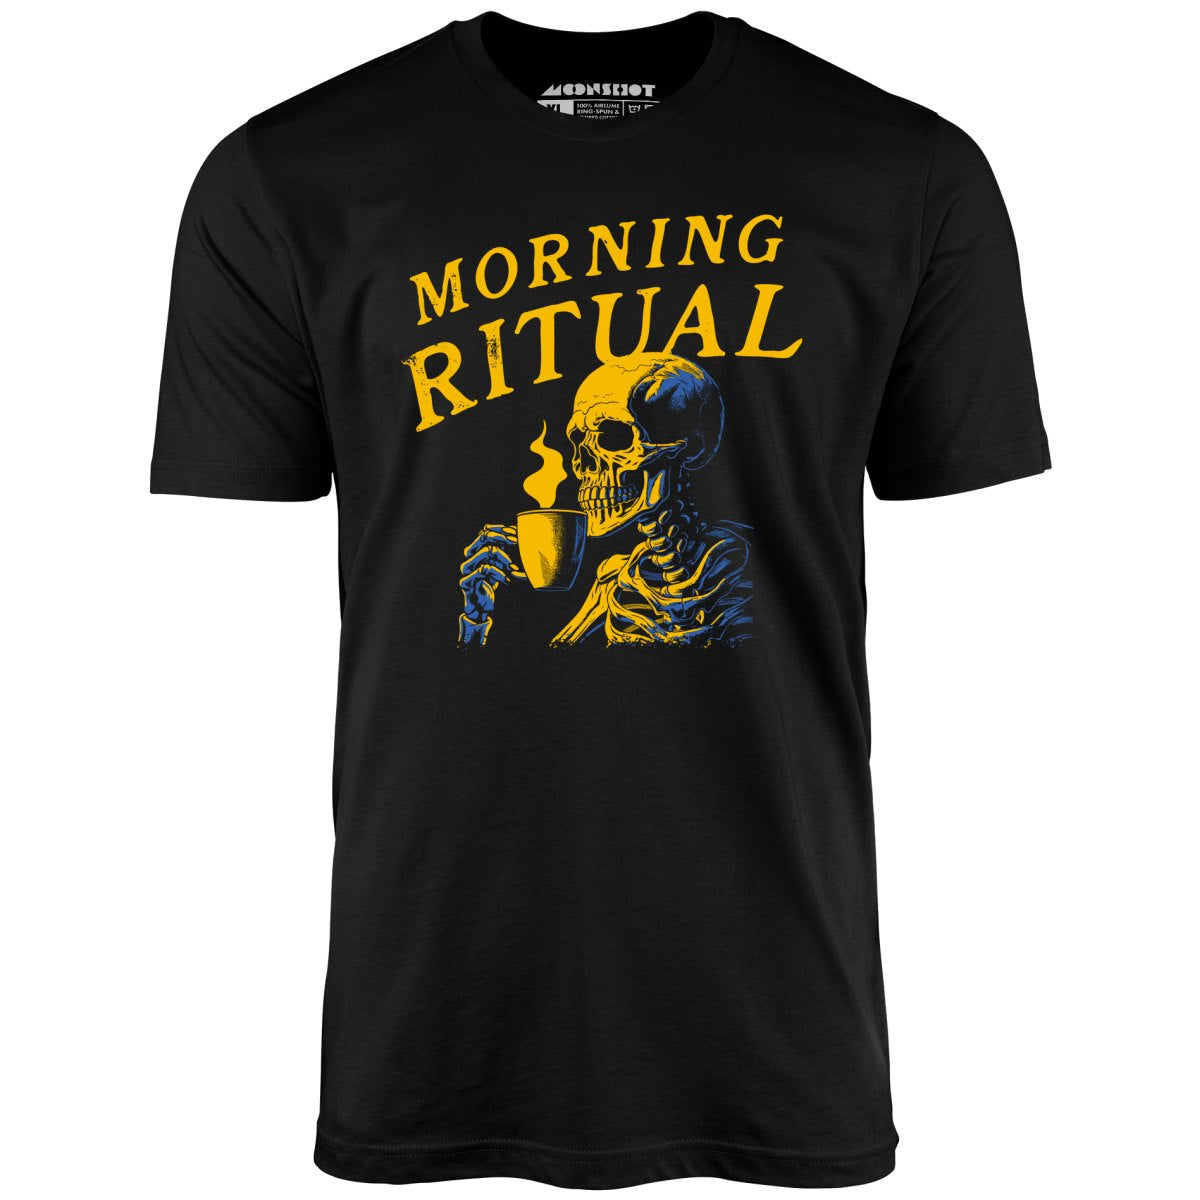 Morning Ritual - Unisex T-Shirt